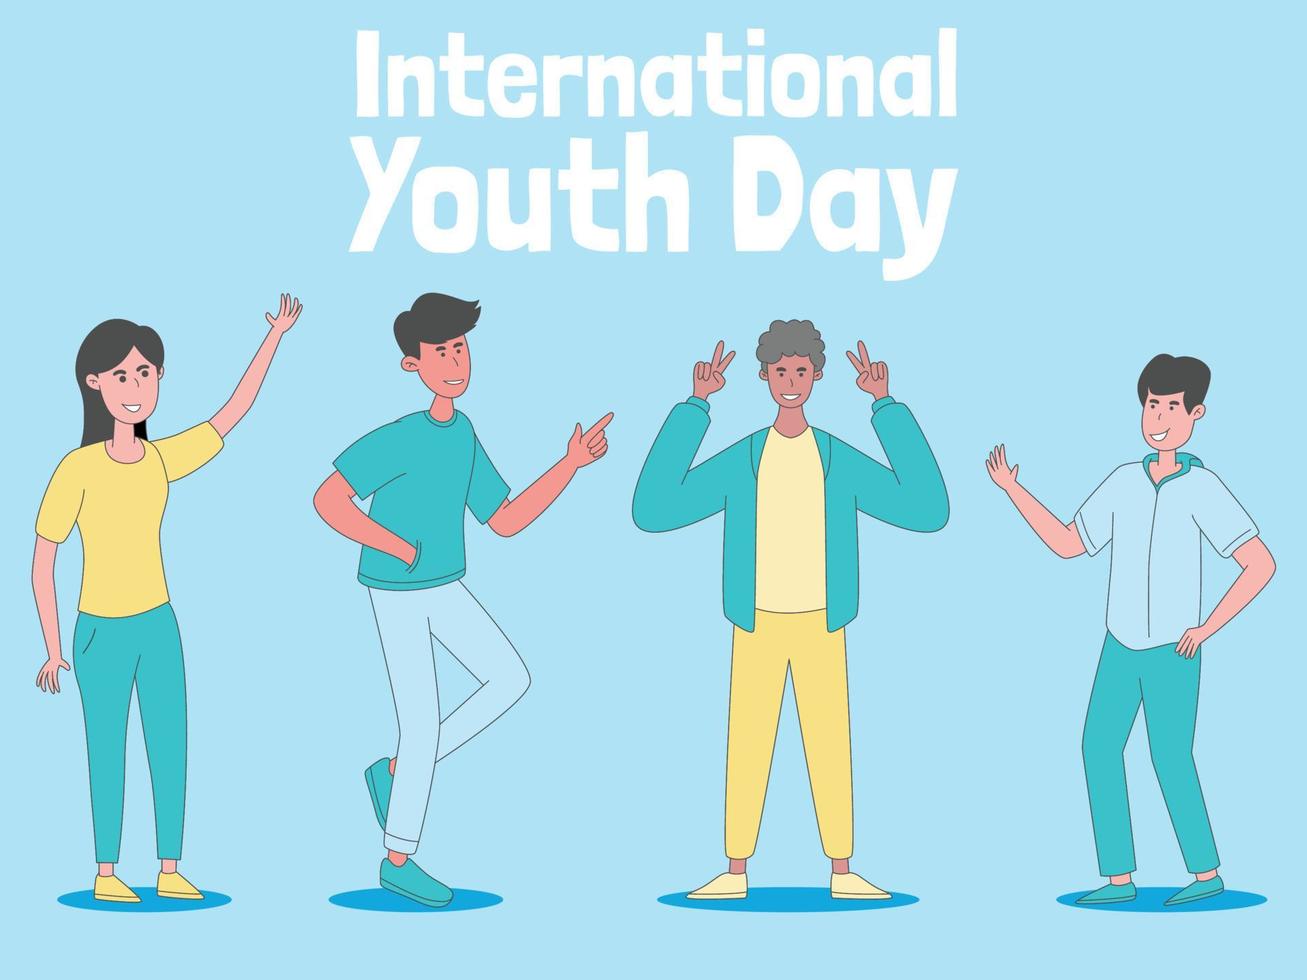 journée internationale de la jeunesse, bannière de fond illustration jeunesse heureuse vecteur